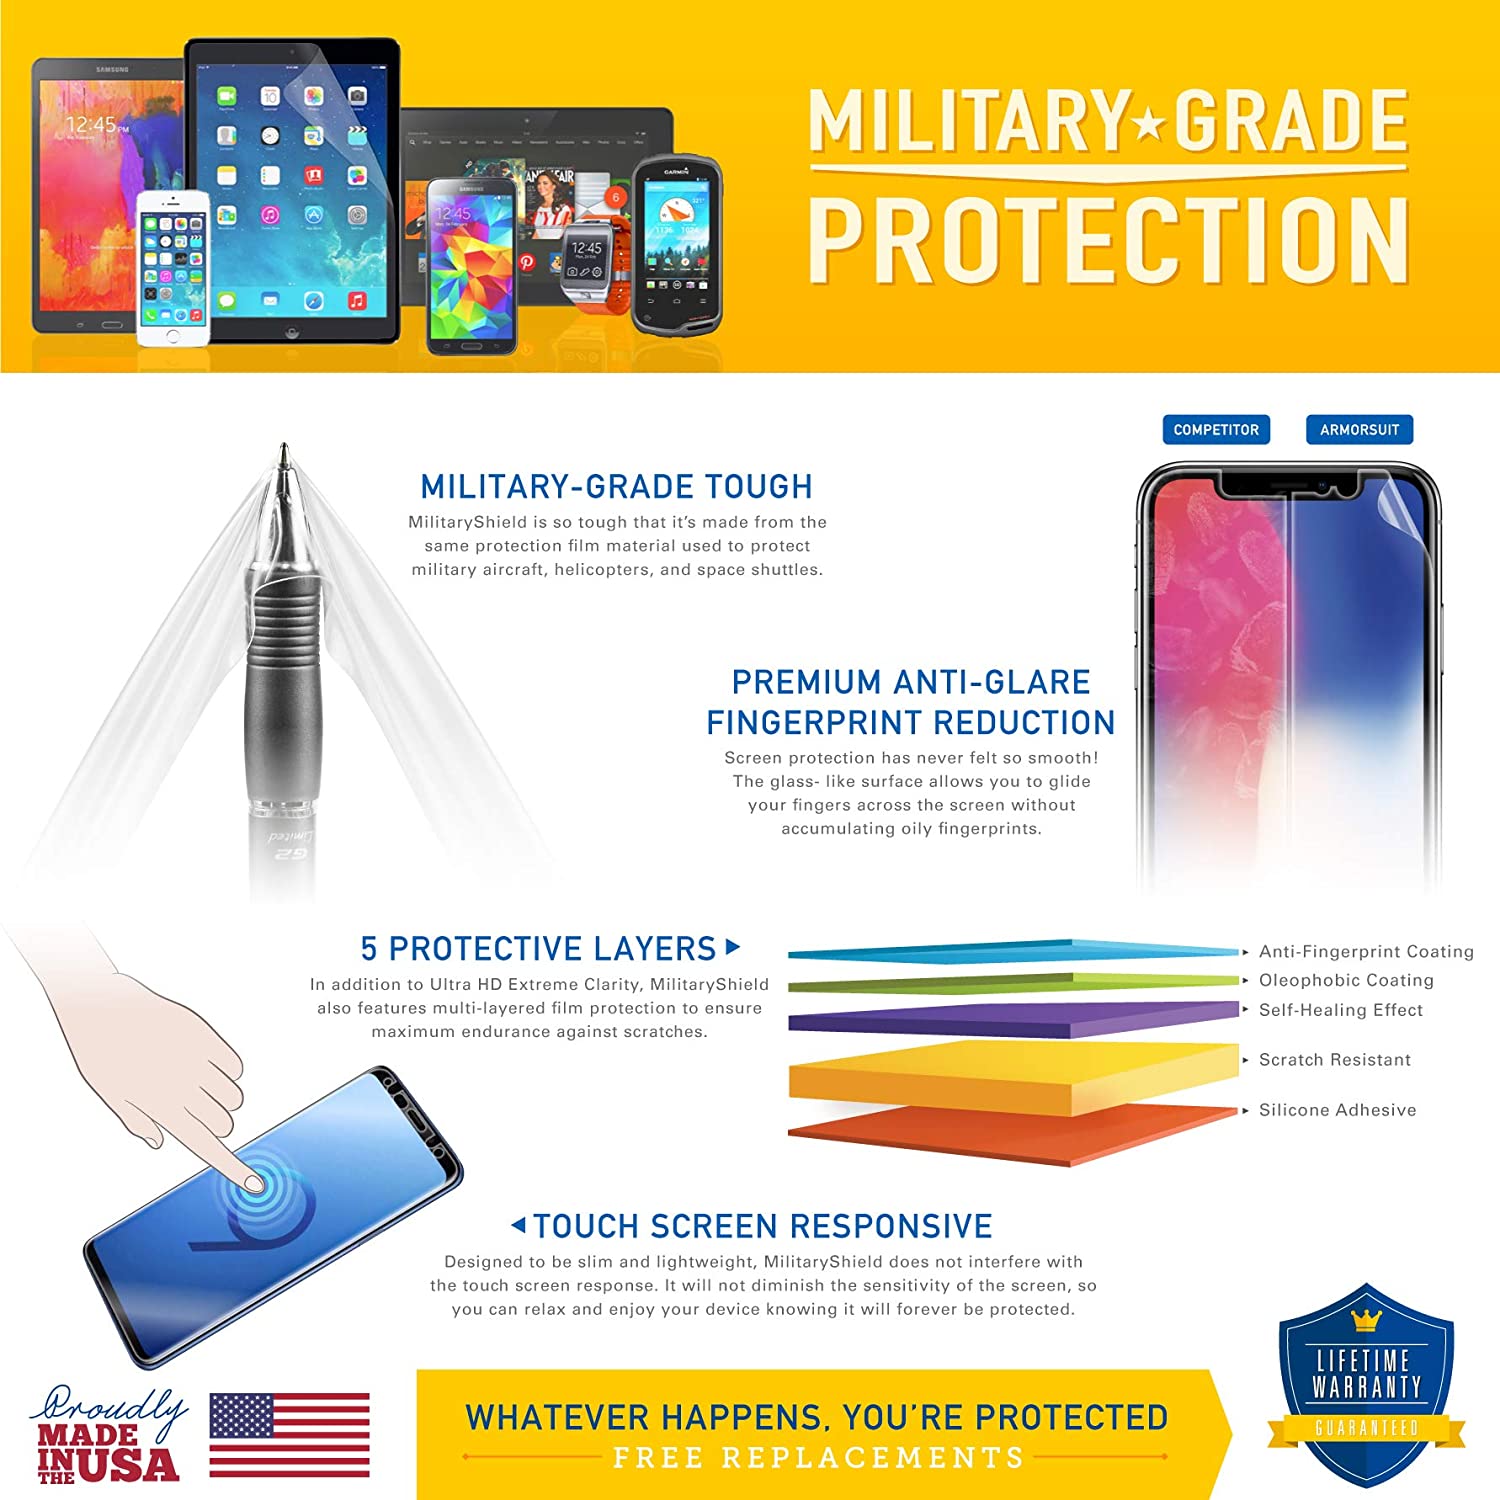 Samsung Galaxy S5 Active Full Body Skin Protector